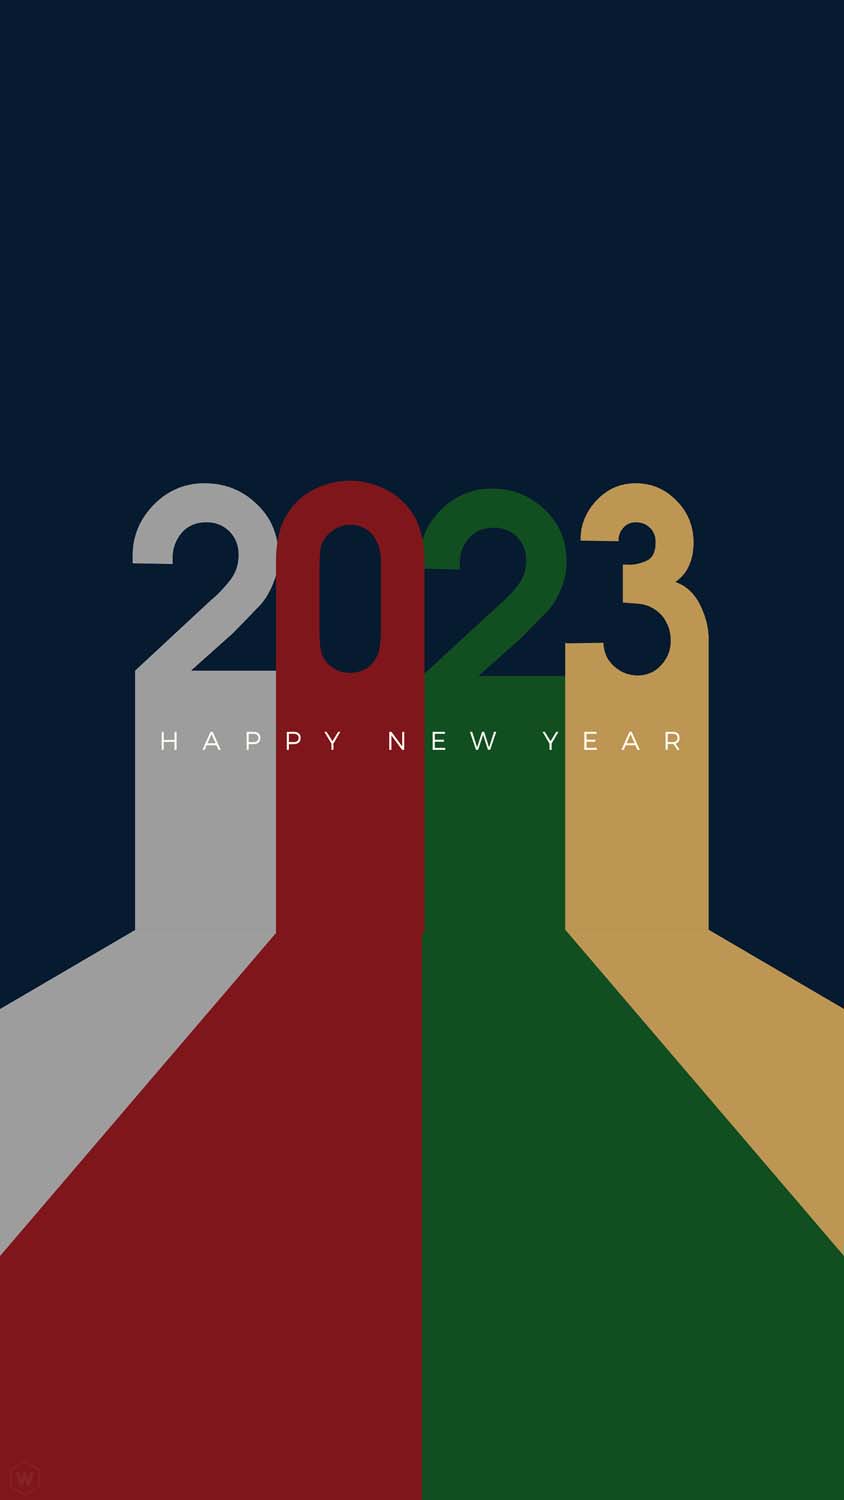 2023 Happy New Year IPhone Wallpaper HD 1 Wallpaper, iPhone Wallpaper